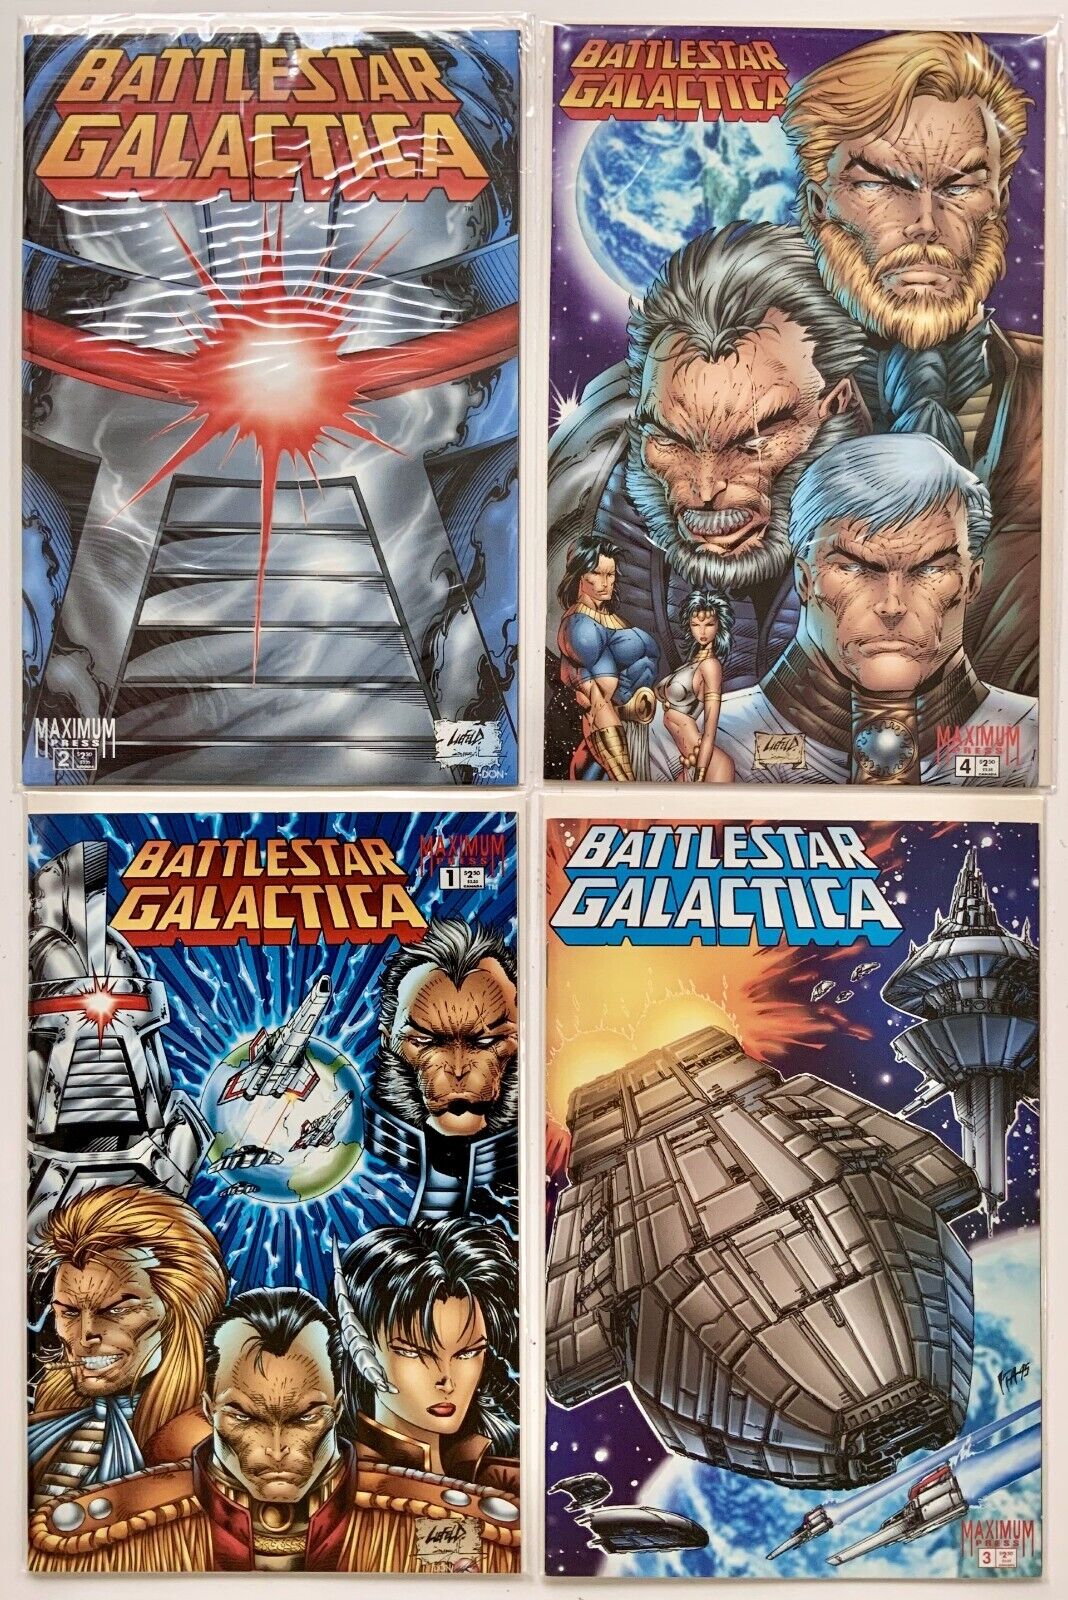 Battlestar Galactica comics by Maximum Press and Realm Press, 1990s, VF/NM